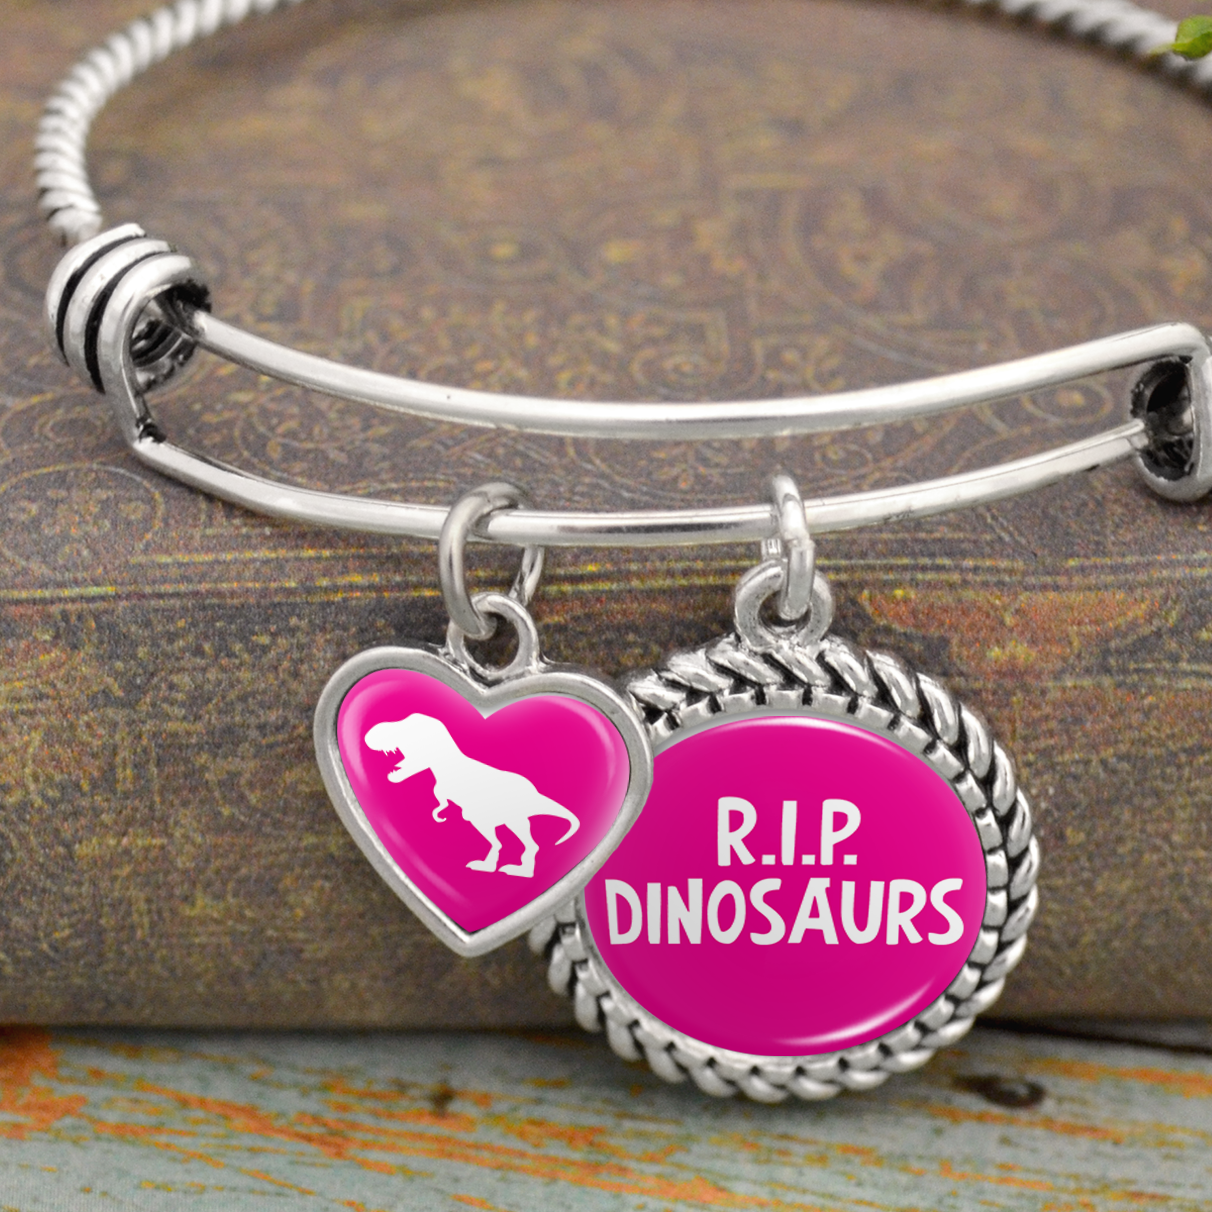 R.I.P. Dinosaurs Charm Bracelet